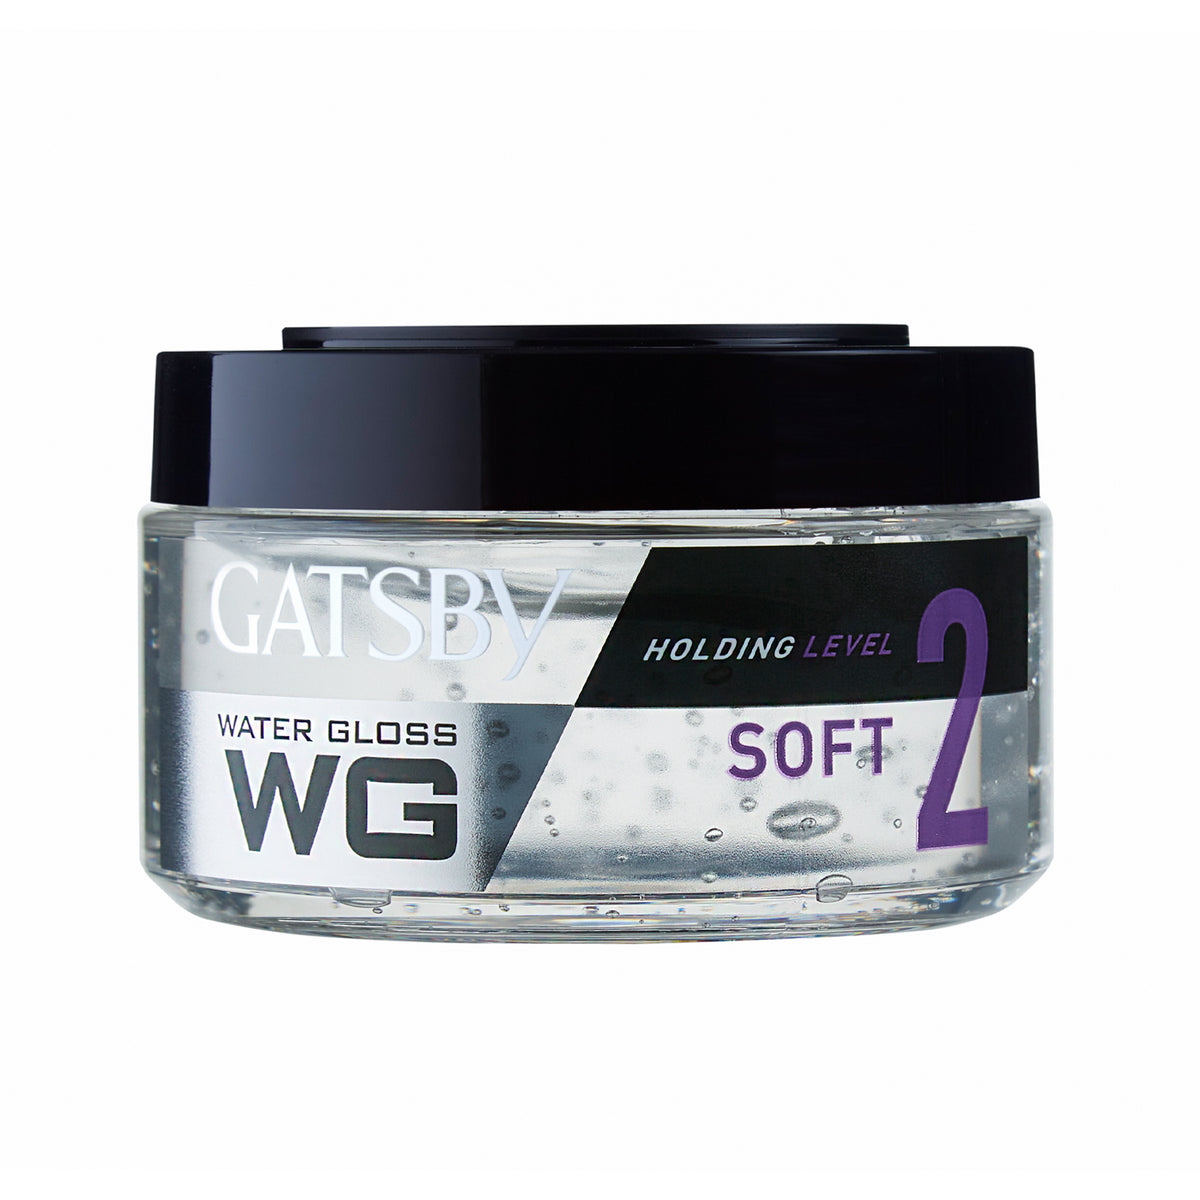 Gatsby Water Gloss - Soft, 150g Gardenia Cosmotrade LLP